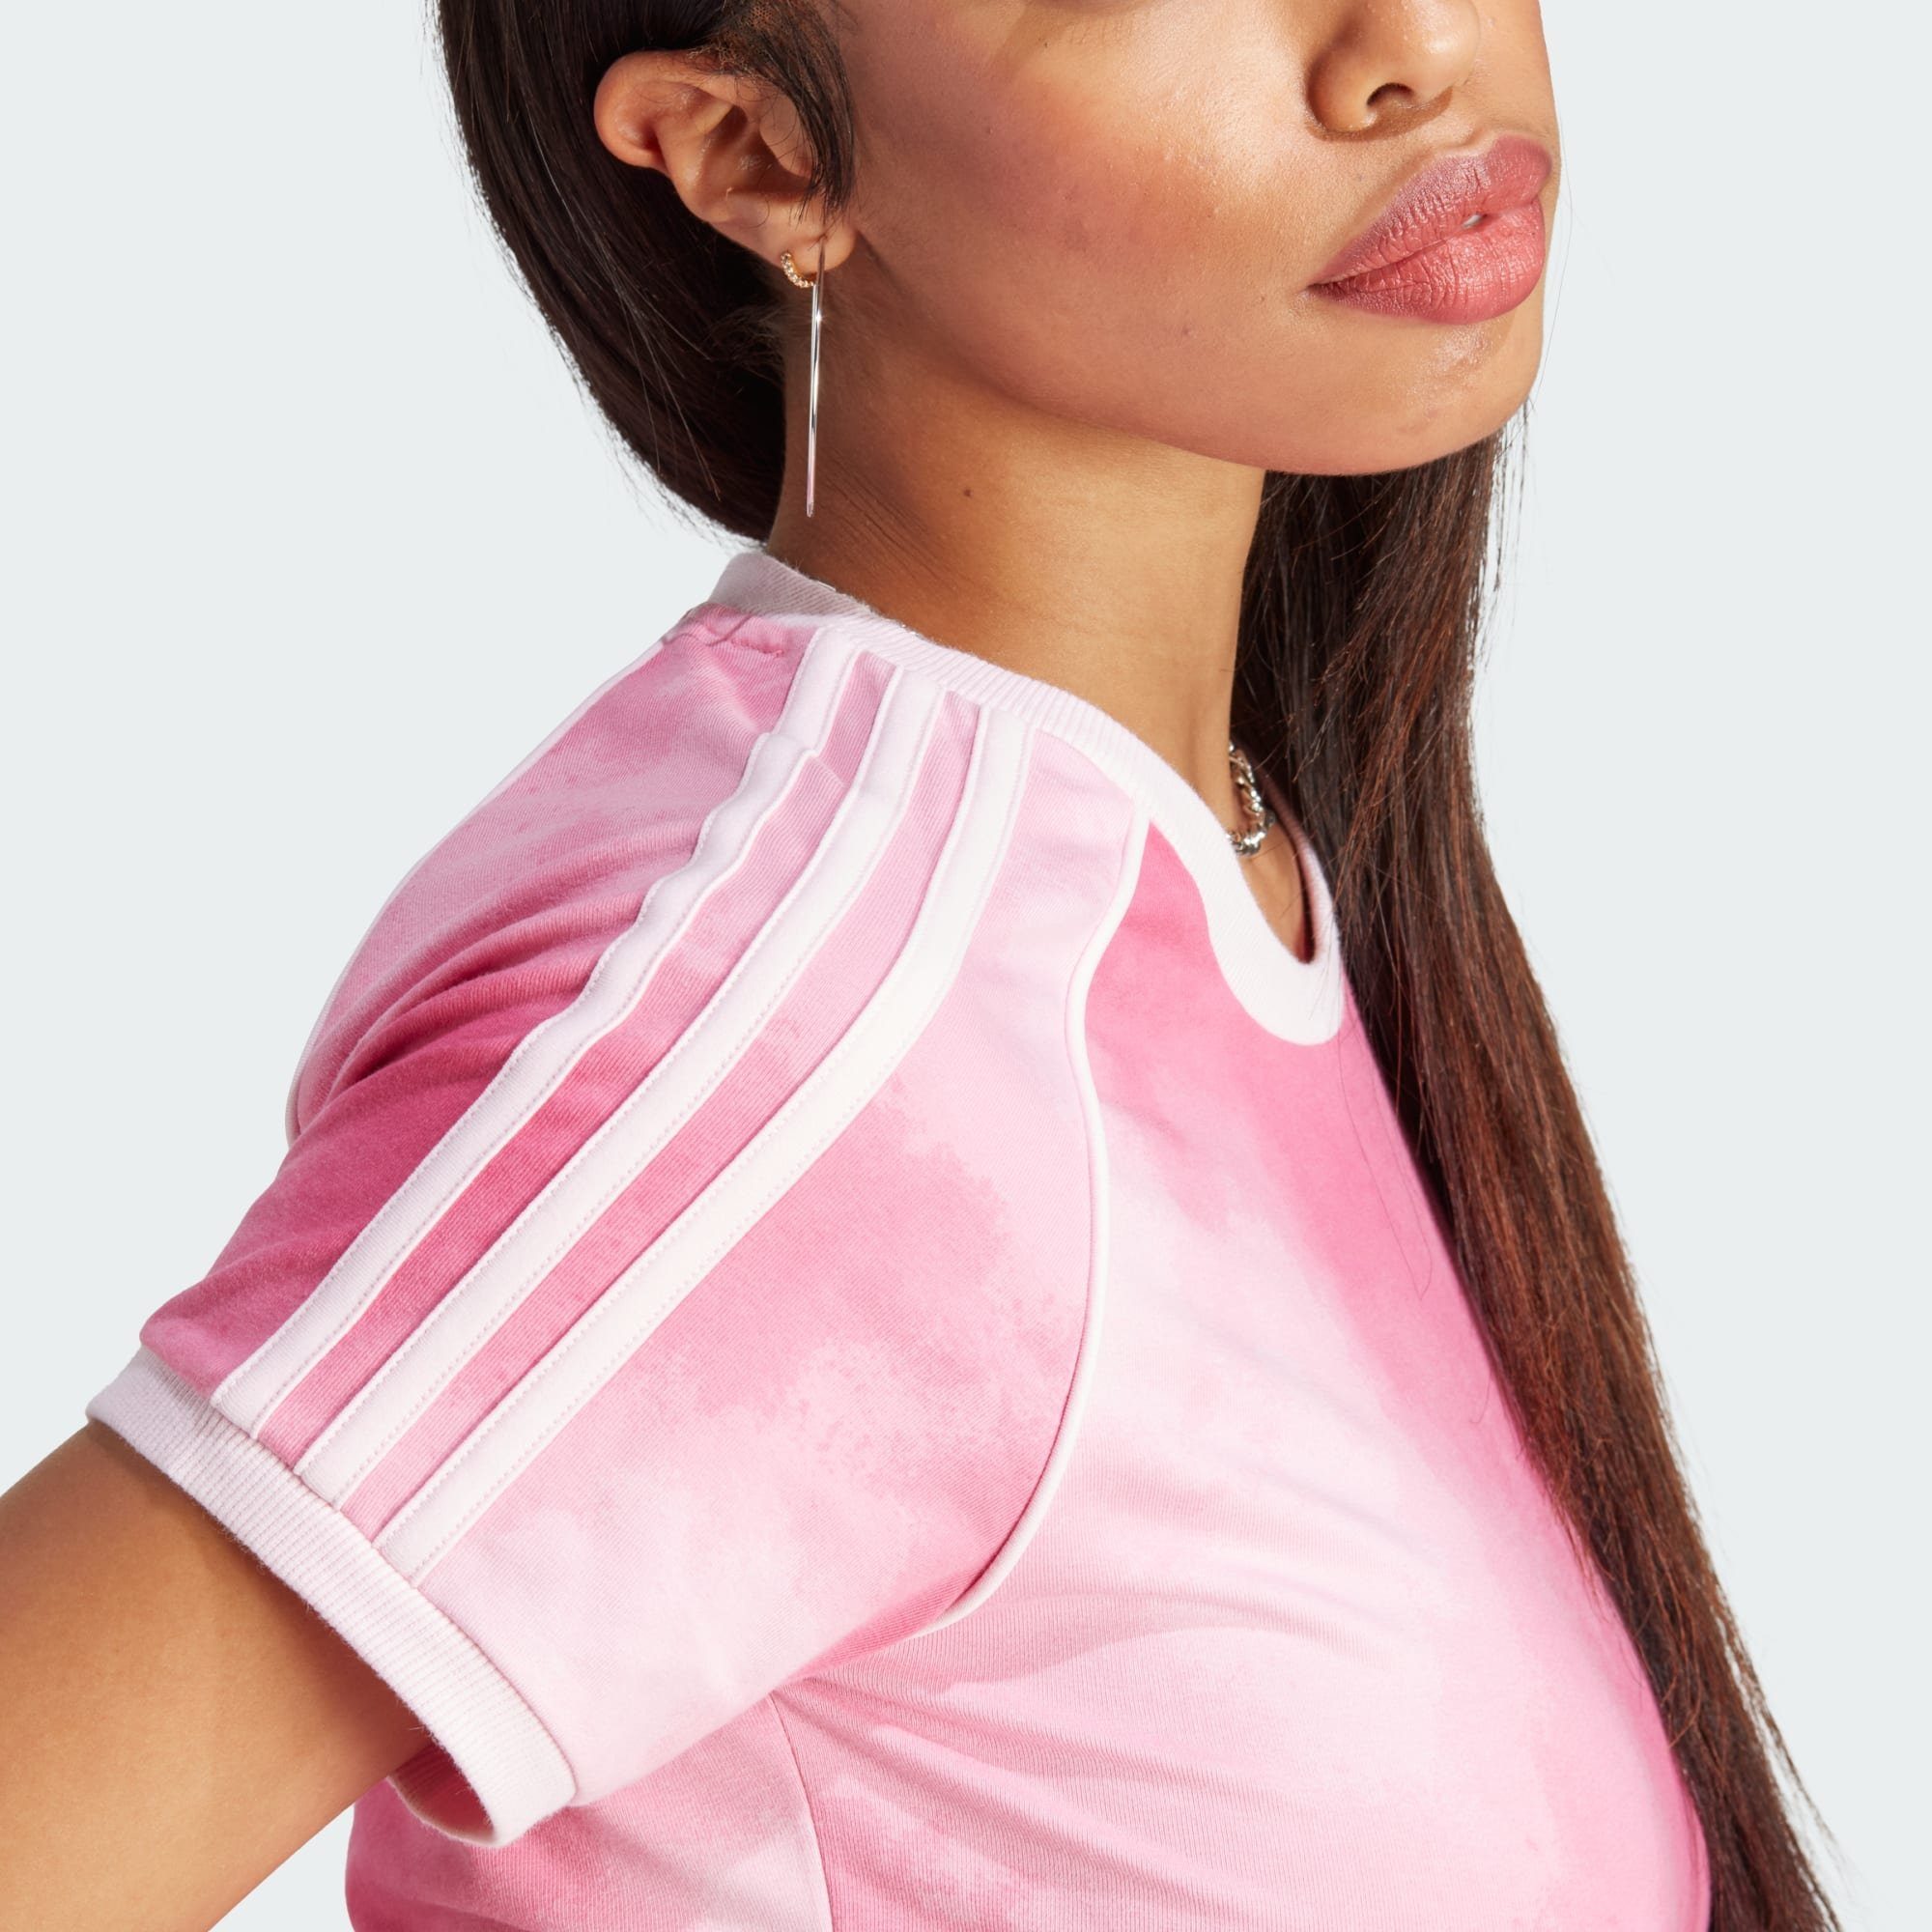 3-STREIFEN COLOUR Originals / Pink FADE adidas T-Shirt T-SHIRT Clear Multicolor